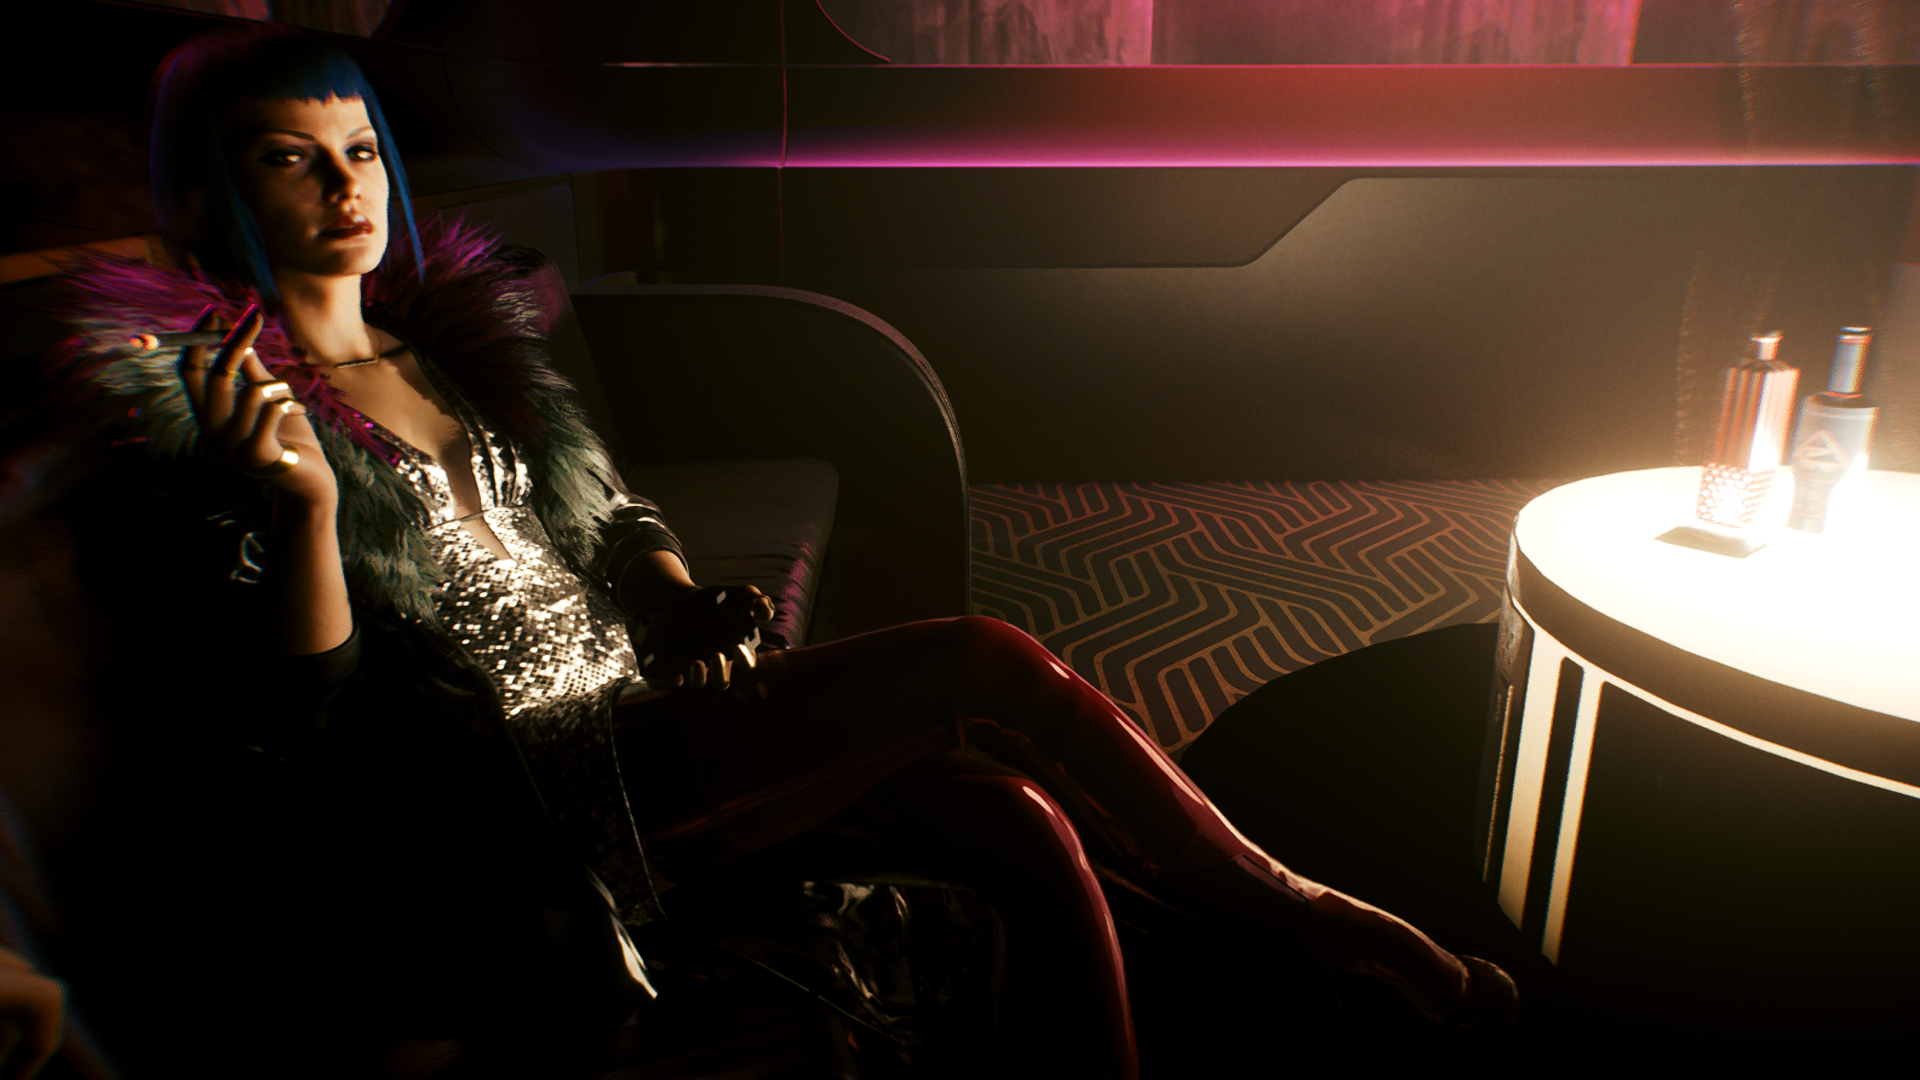 Hideo Kojima in Cyberpunk 2077 by DEVILUSHNINJA on DeviantArt